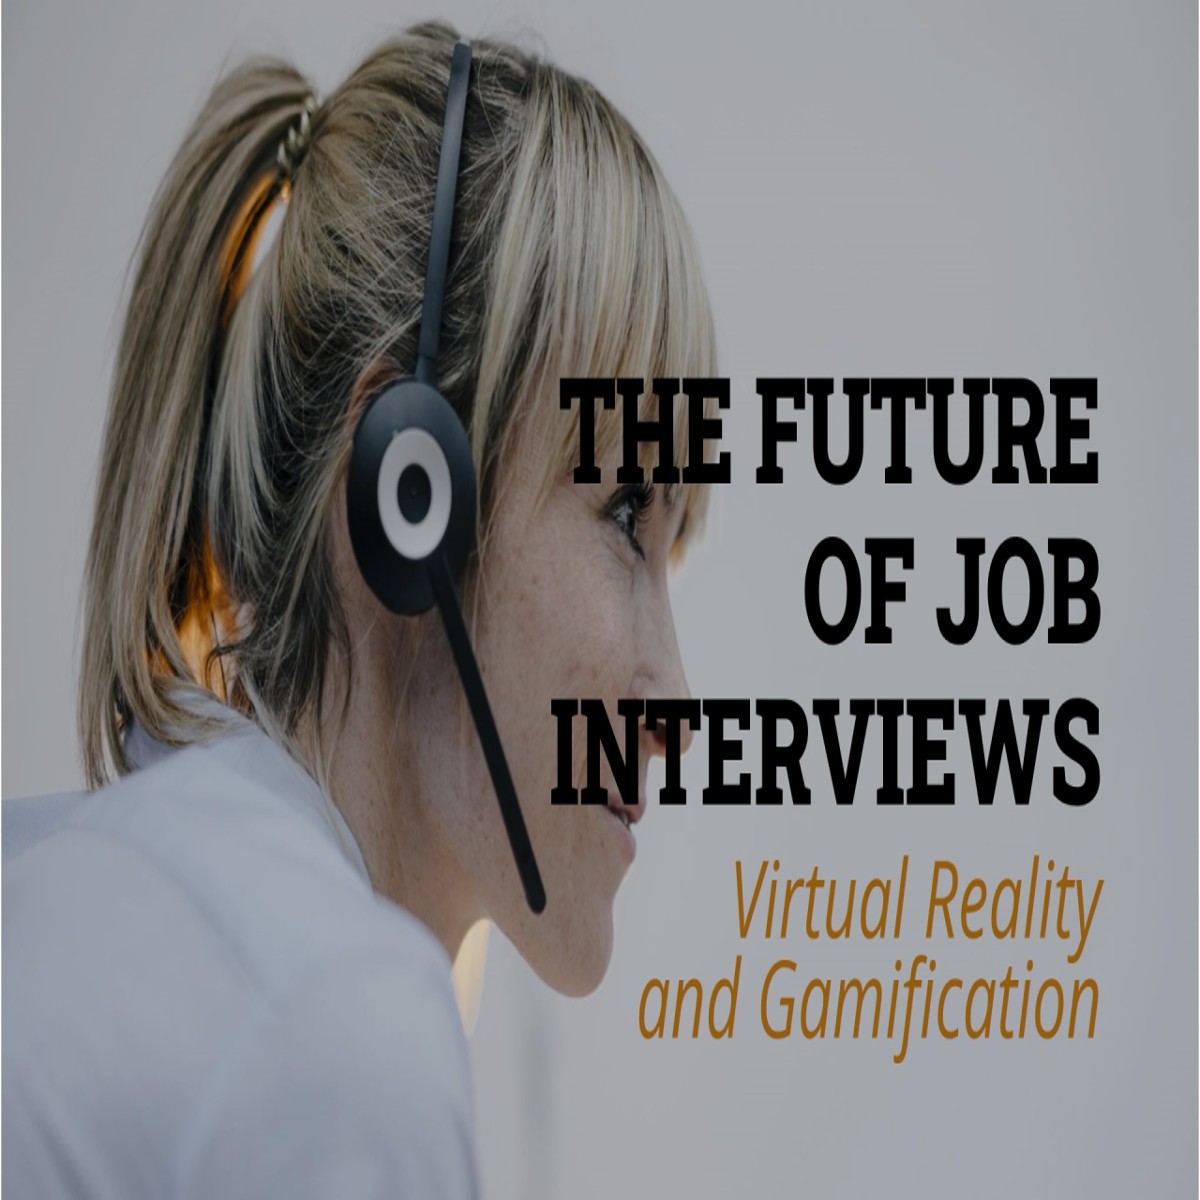 The Evolution of Job Interviews: Virtual Reality, Gamification, and Beyond